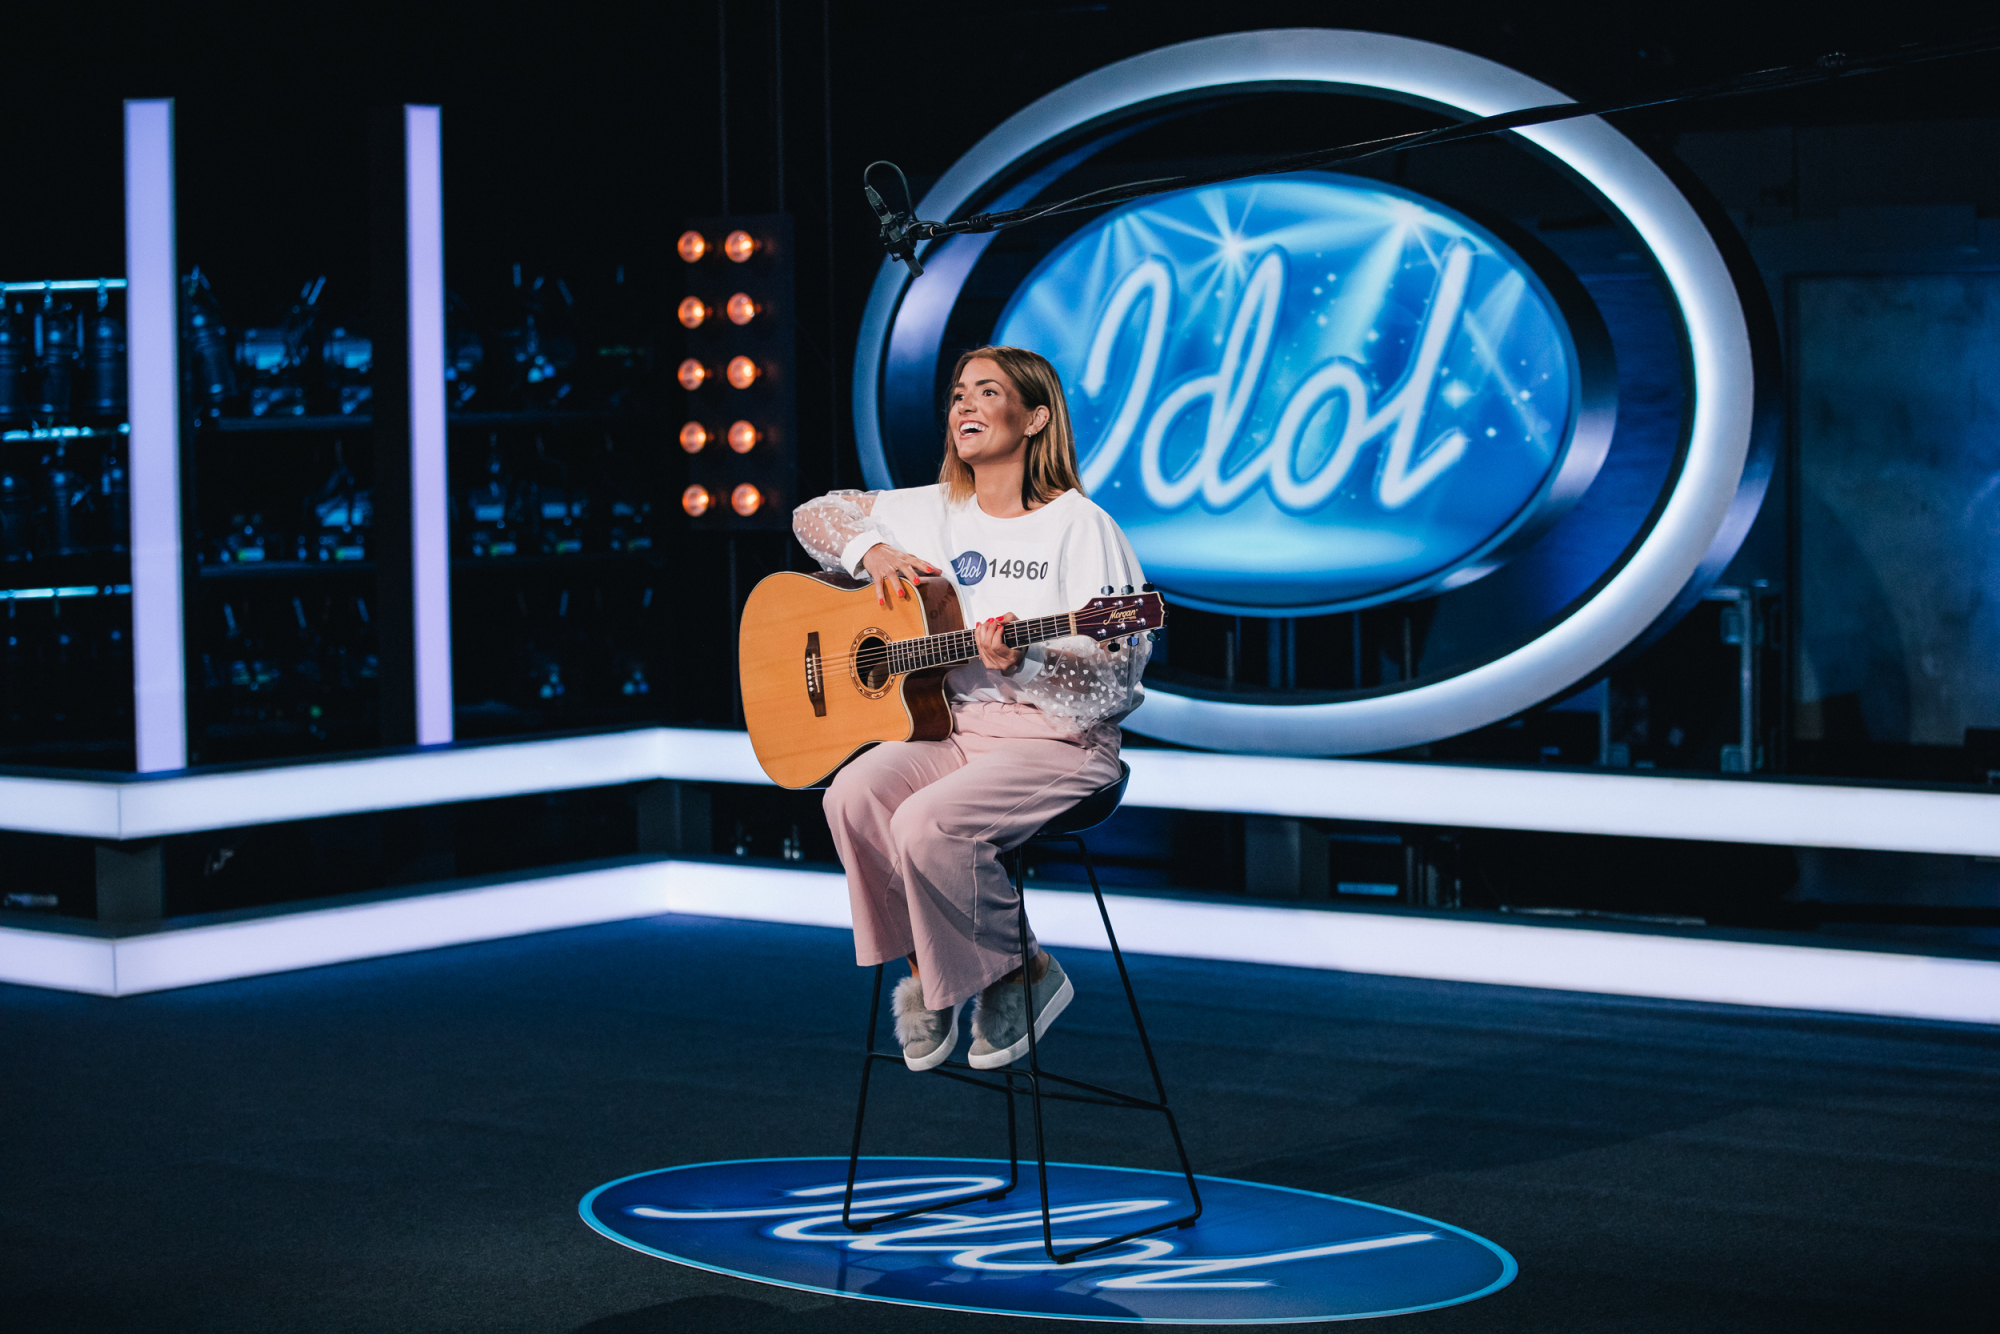 Idol 2018 - audition i Oslo - deltaker nr. 14960, Iselin Guttormsen.